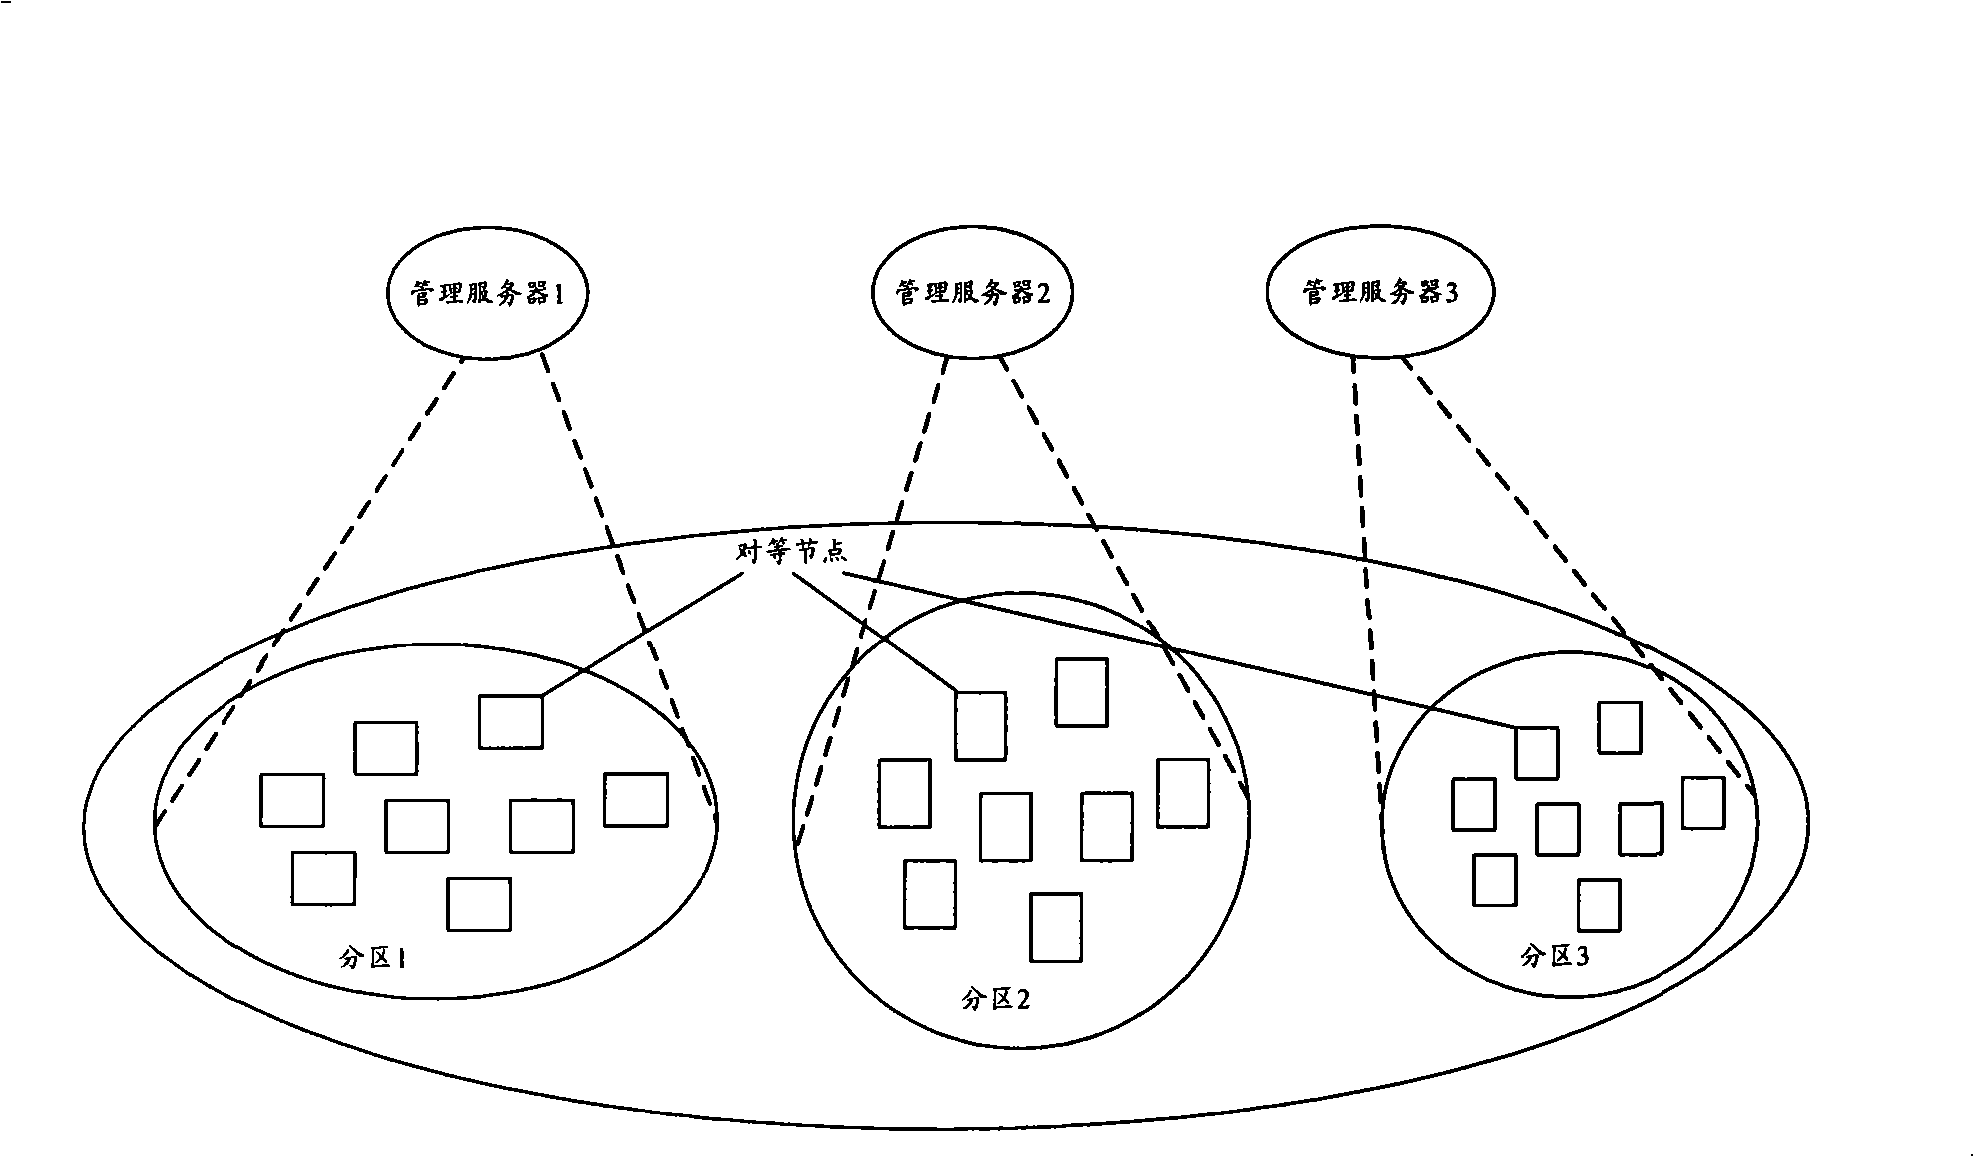 Source node selection method